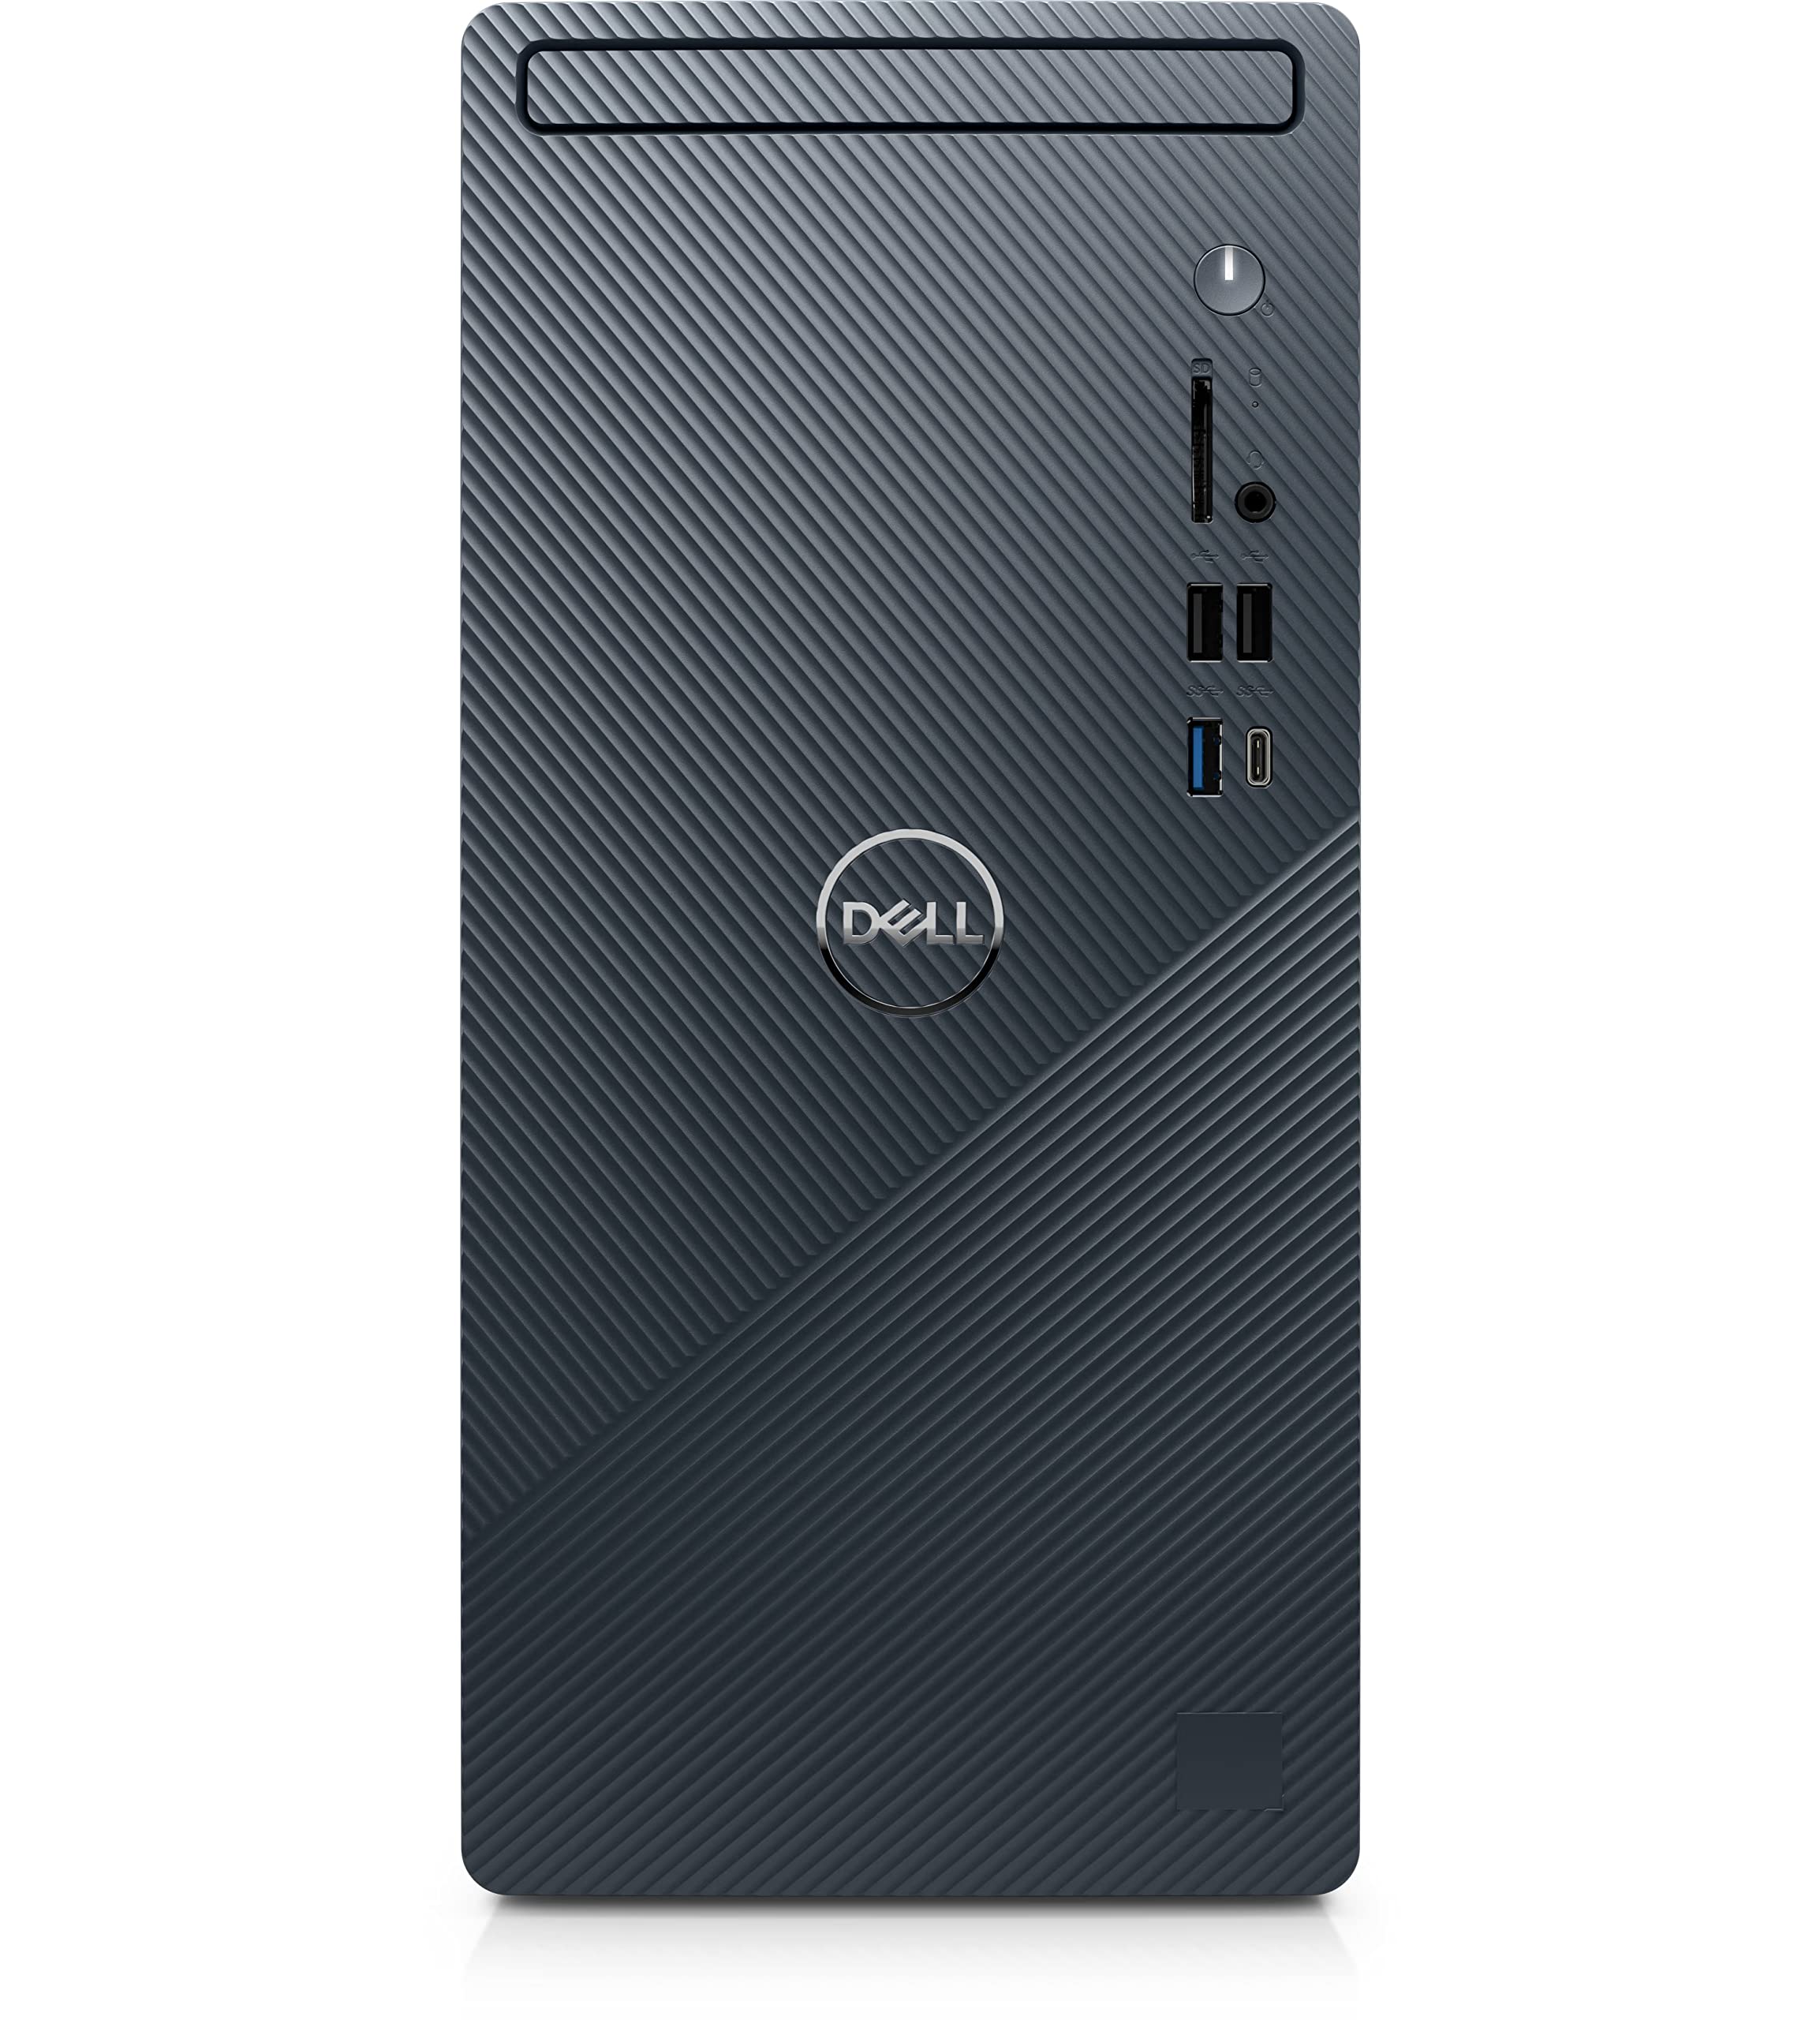 Dell Inspiron 3020 Tower Desktop Computer - 13th Gen Intel Core i5-13400 10-Core up to 4.60 GHz Processor, 16GB DDR4 RAM, 1TB NVMe SSD, Intel UHD Graphics 730, DVD+RW, Windows 11 Pro